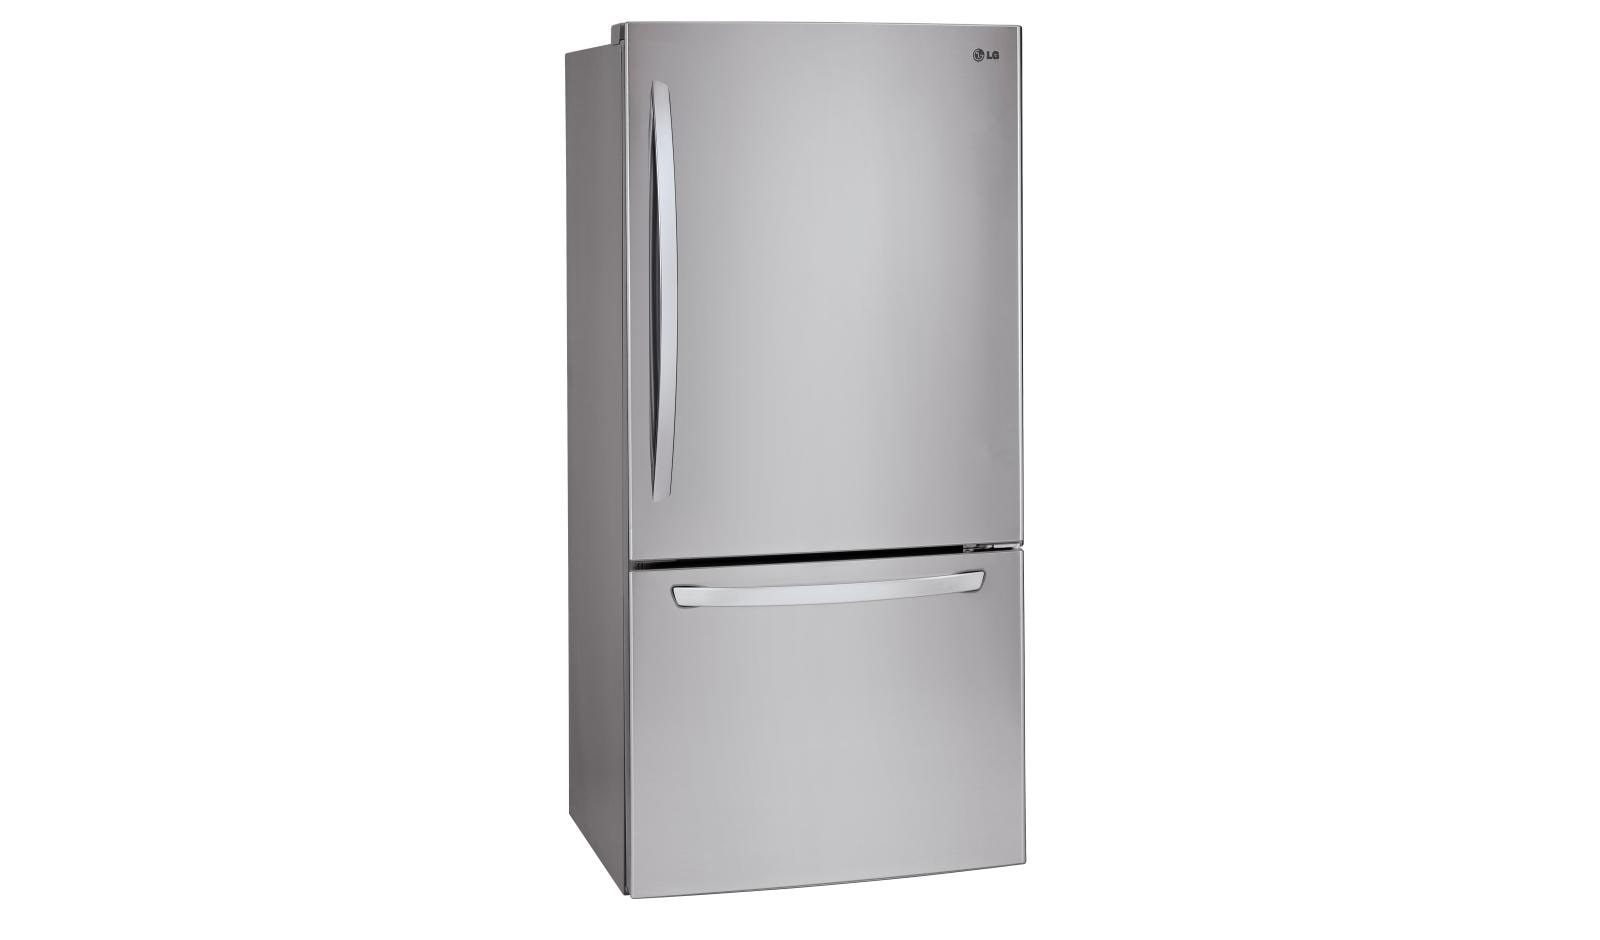 LG LDCS24223S Large 33 Inch Wide Bottom Freezer Refrigerator LG USA